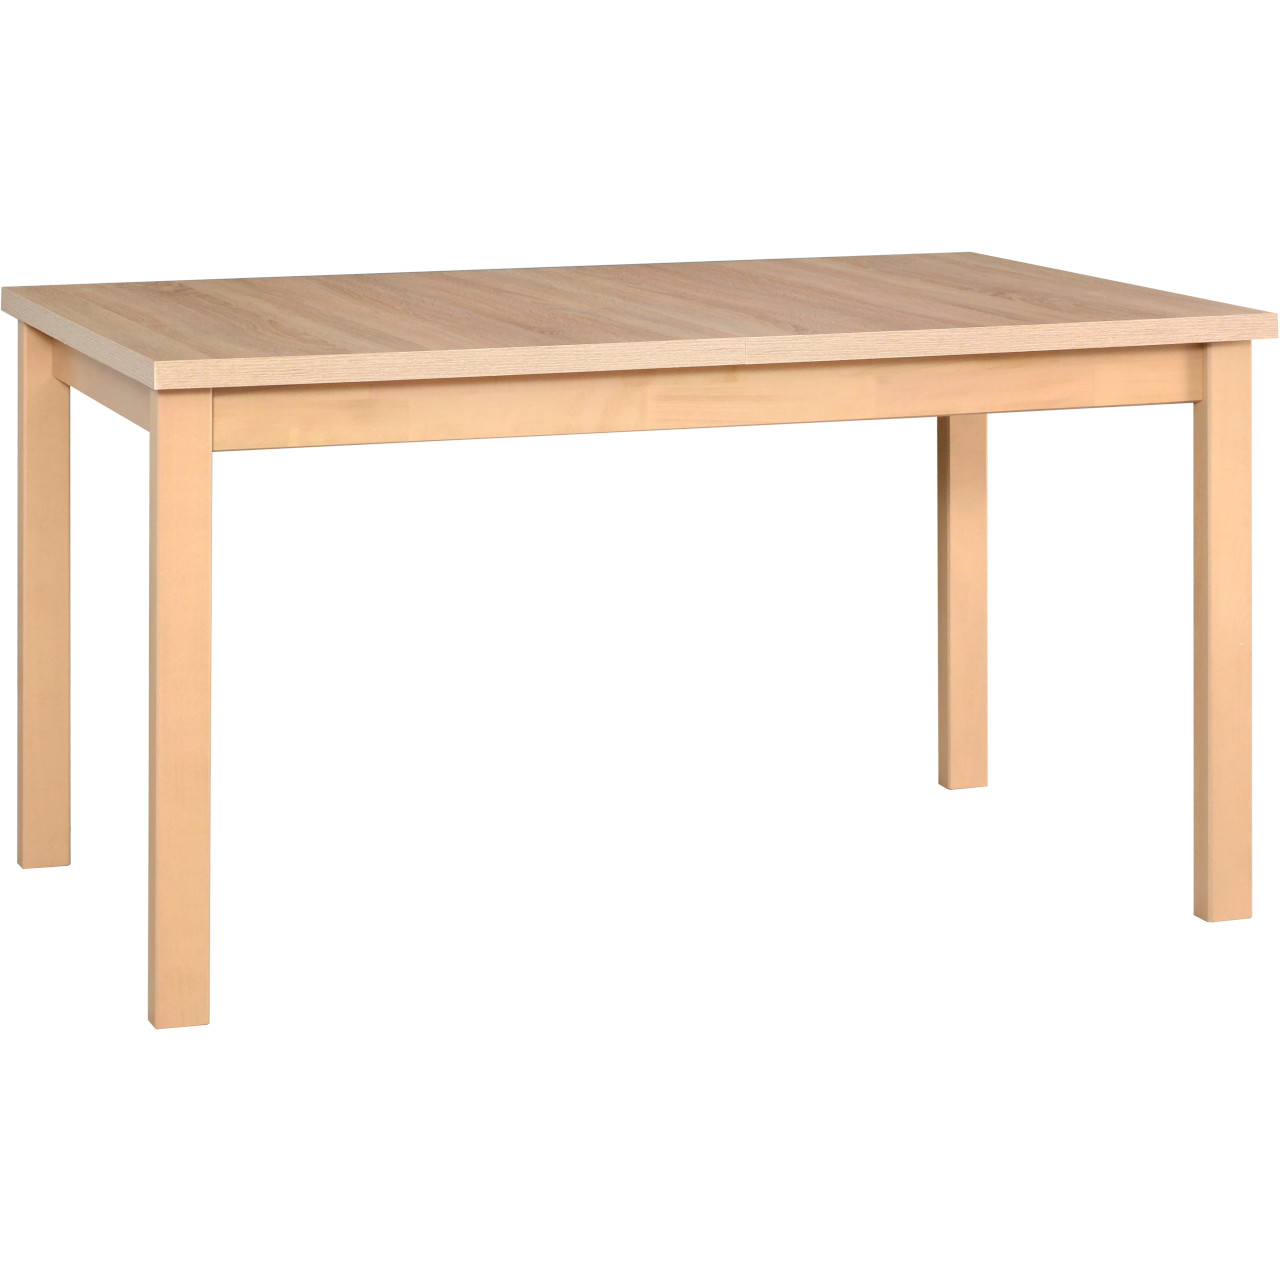 Table ALBA 4 92x160/200 sonoma laminate